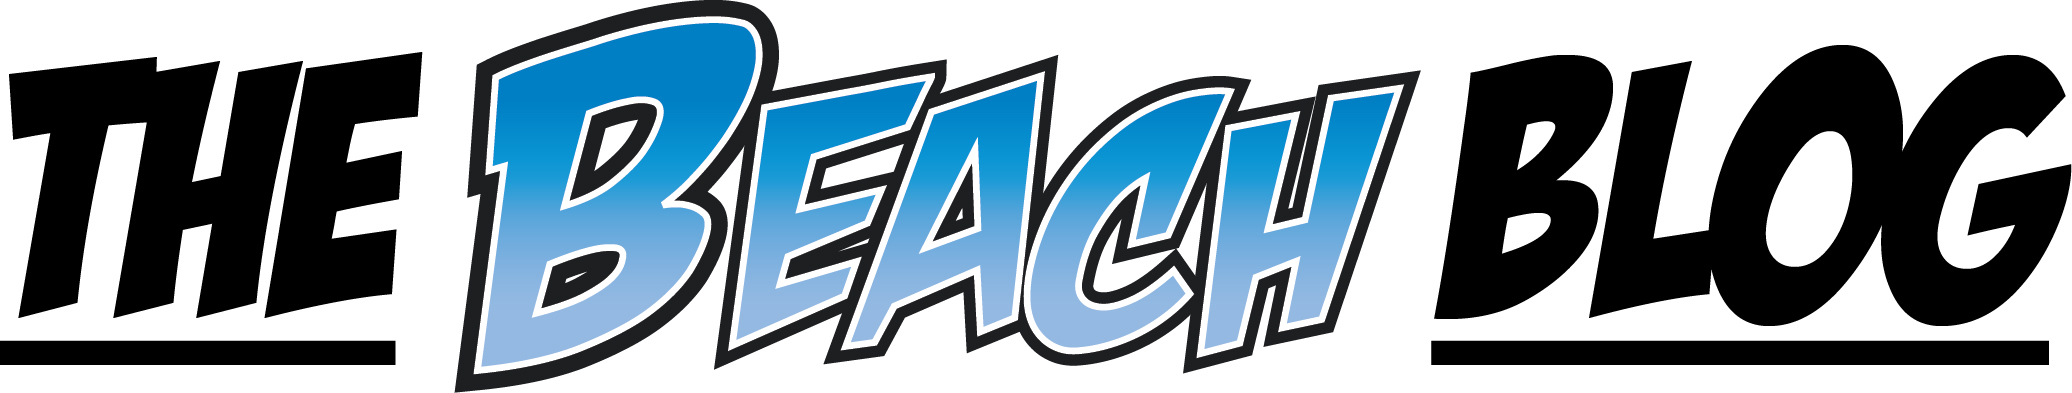 thebeachblog-logo.jpg